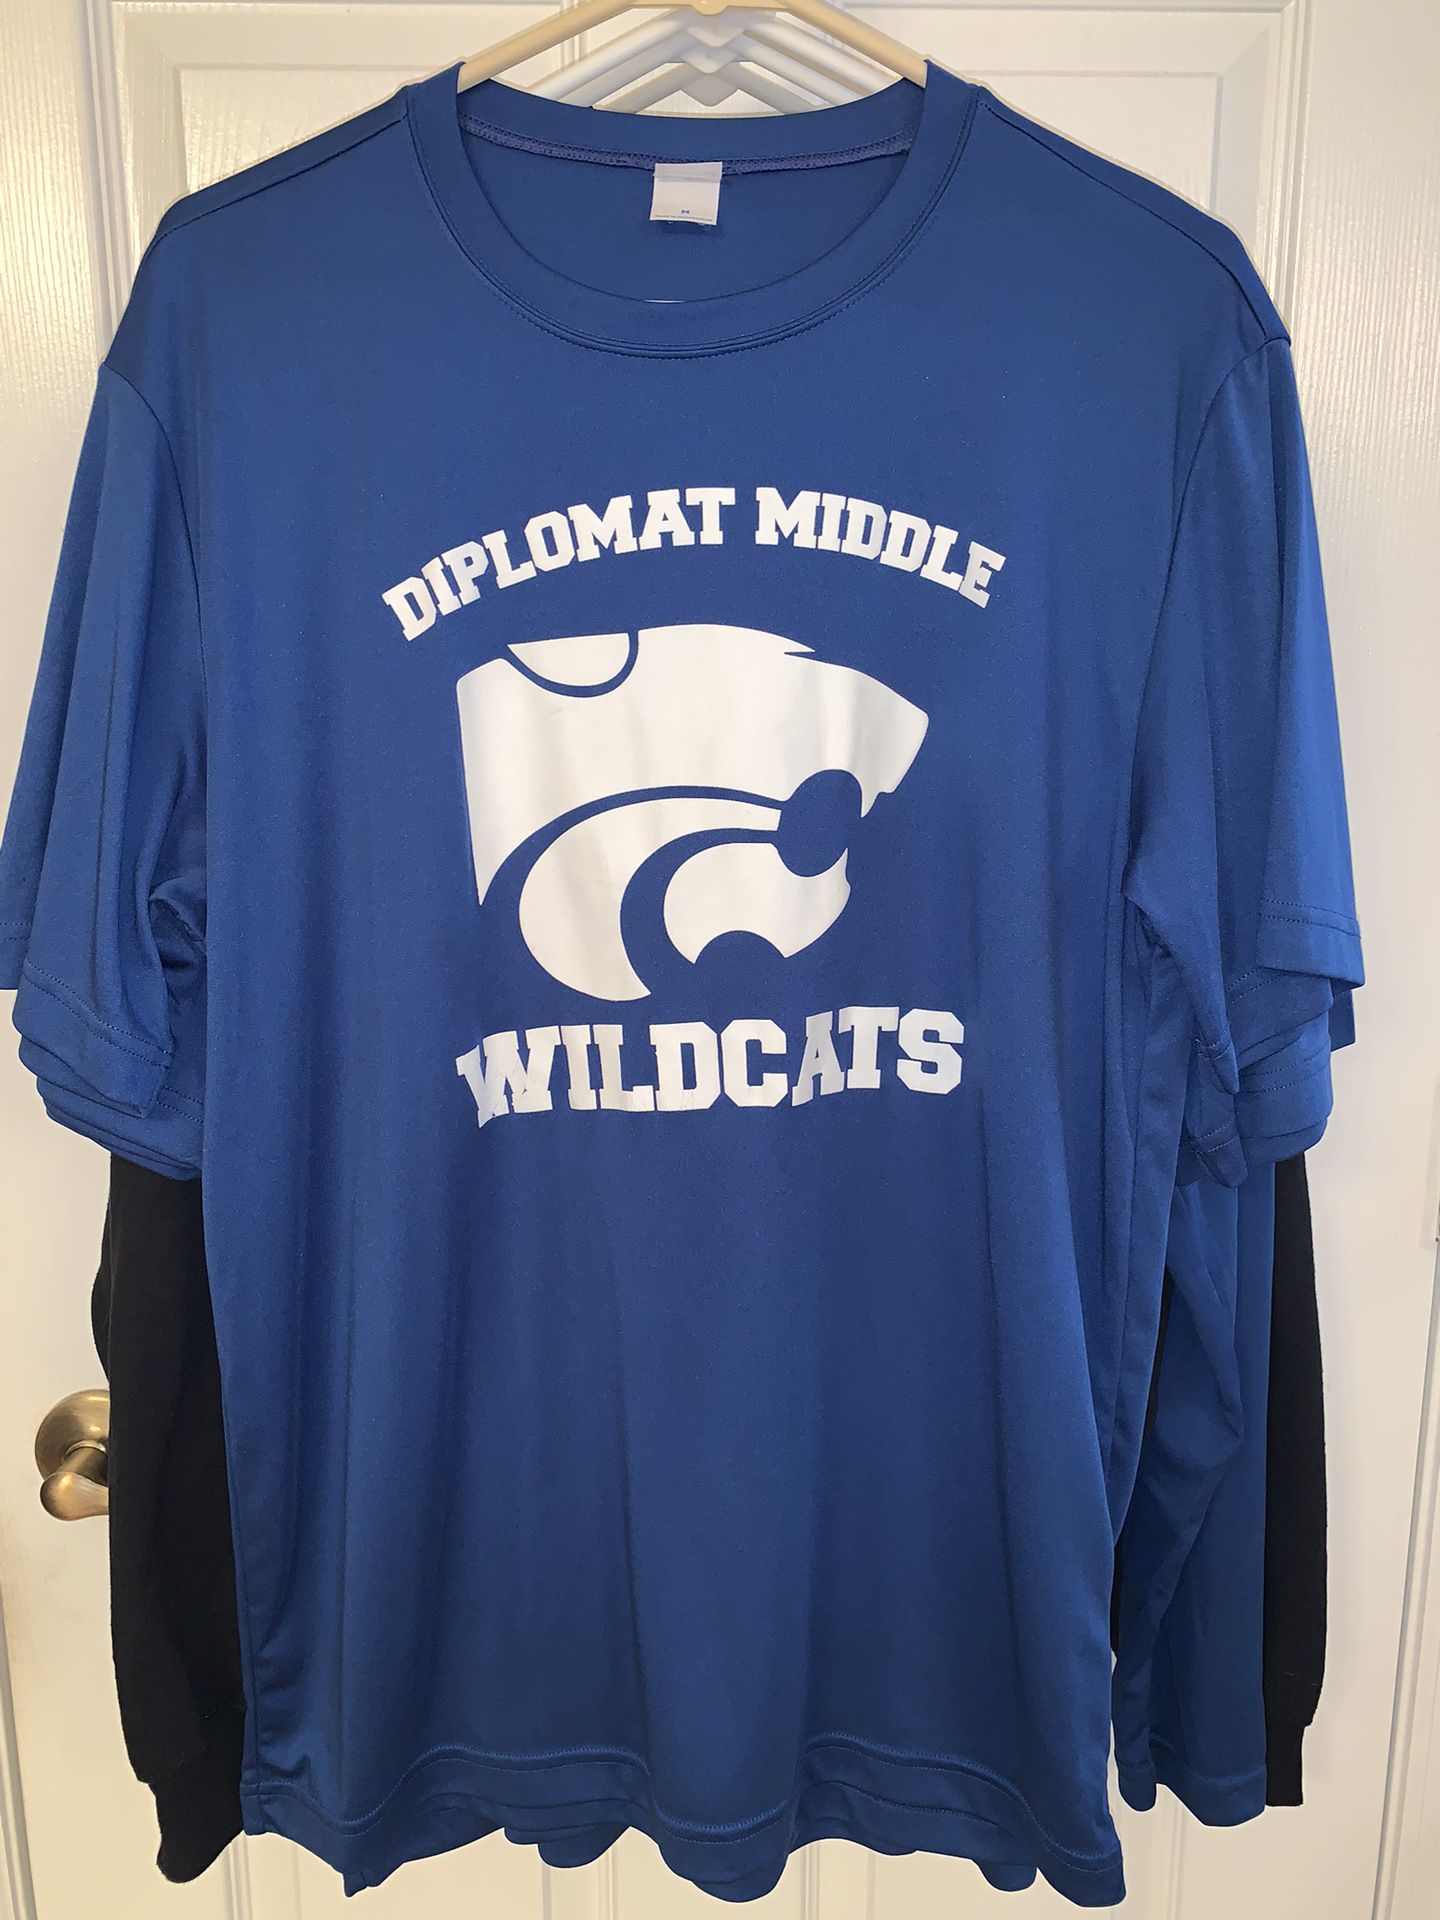 Diplomat Middle School Zipper Sweatshirt- Short sleeve $10.00 & Long Sleeve  $15.00 